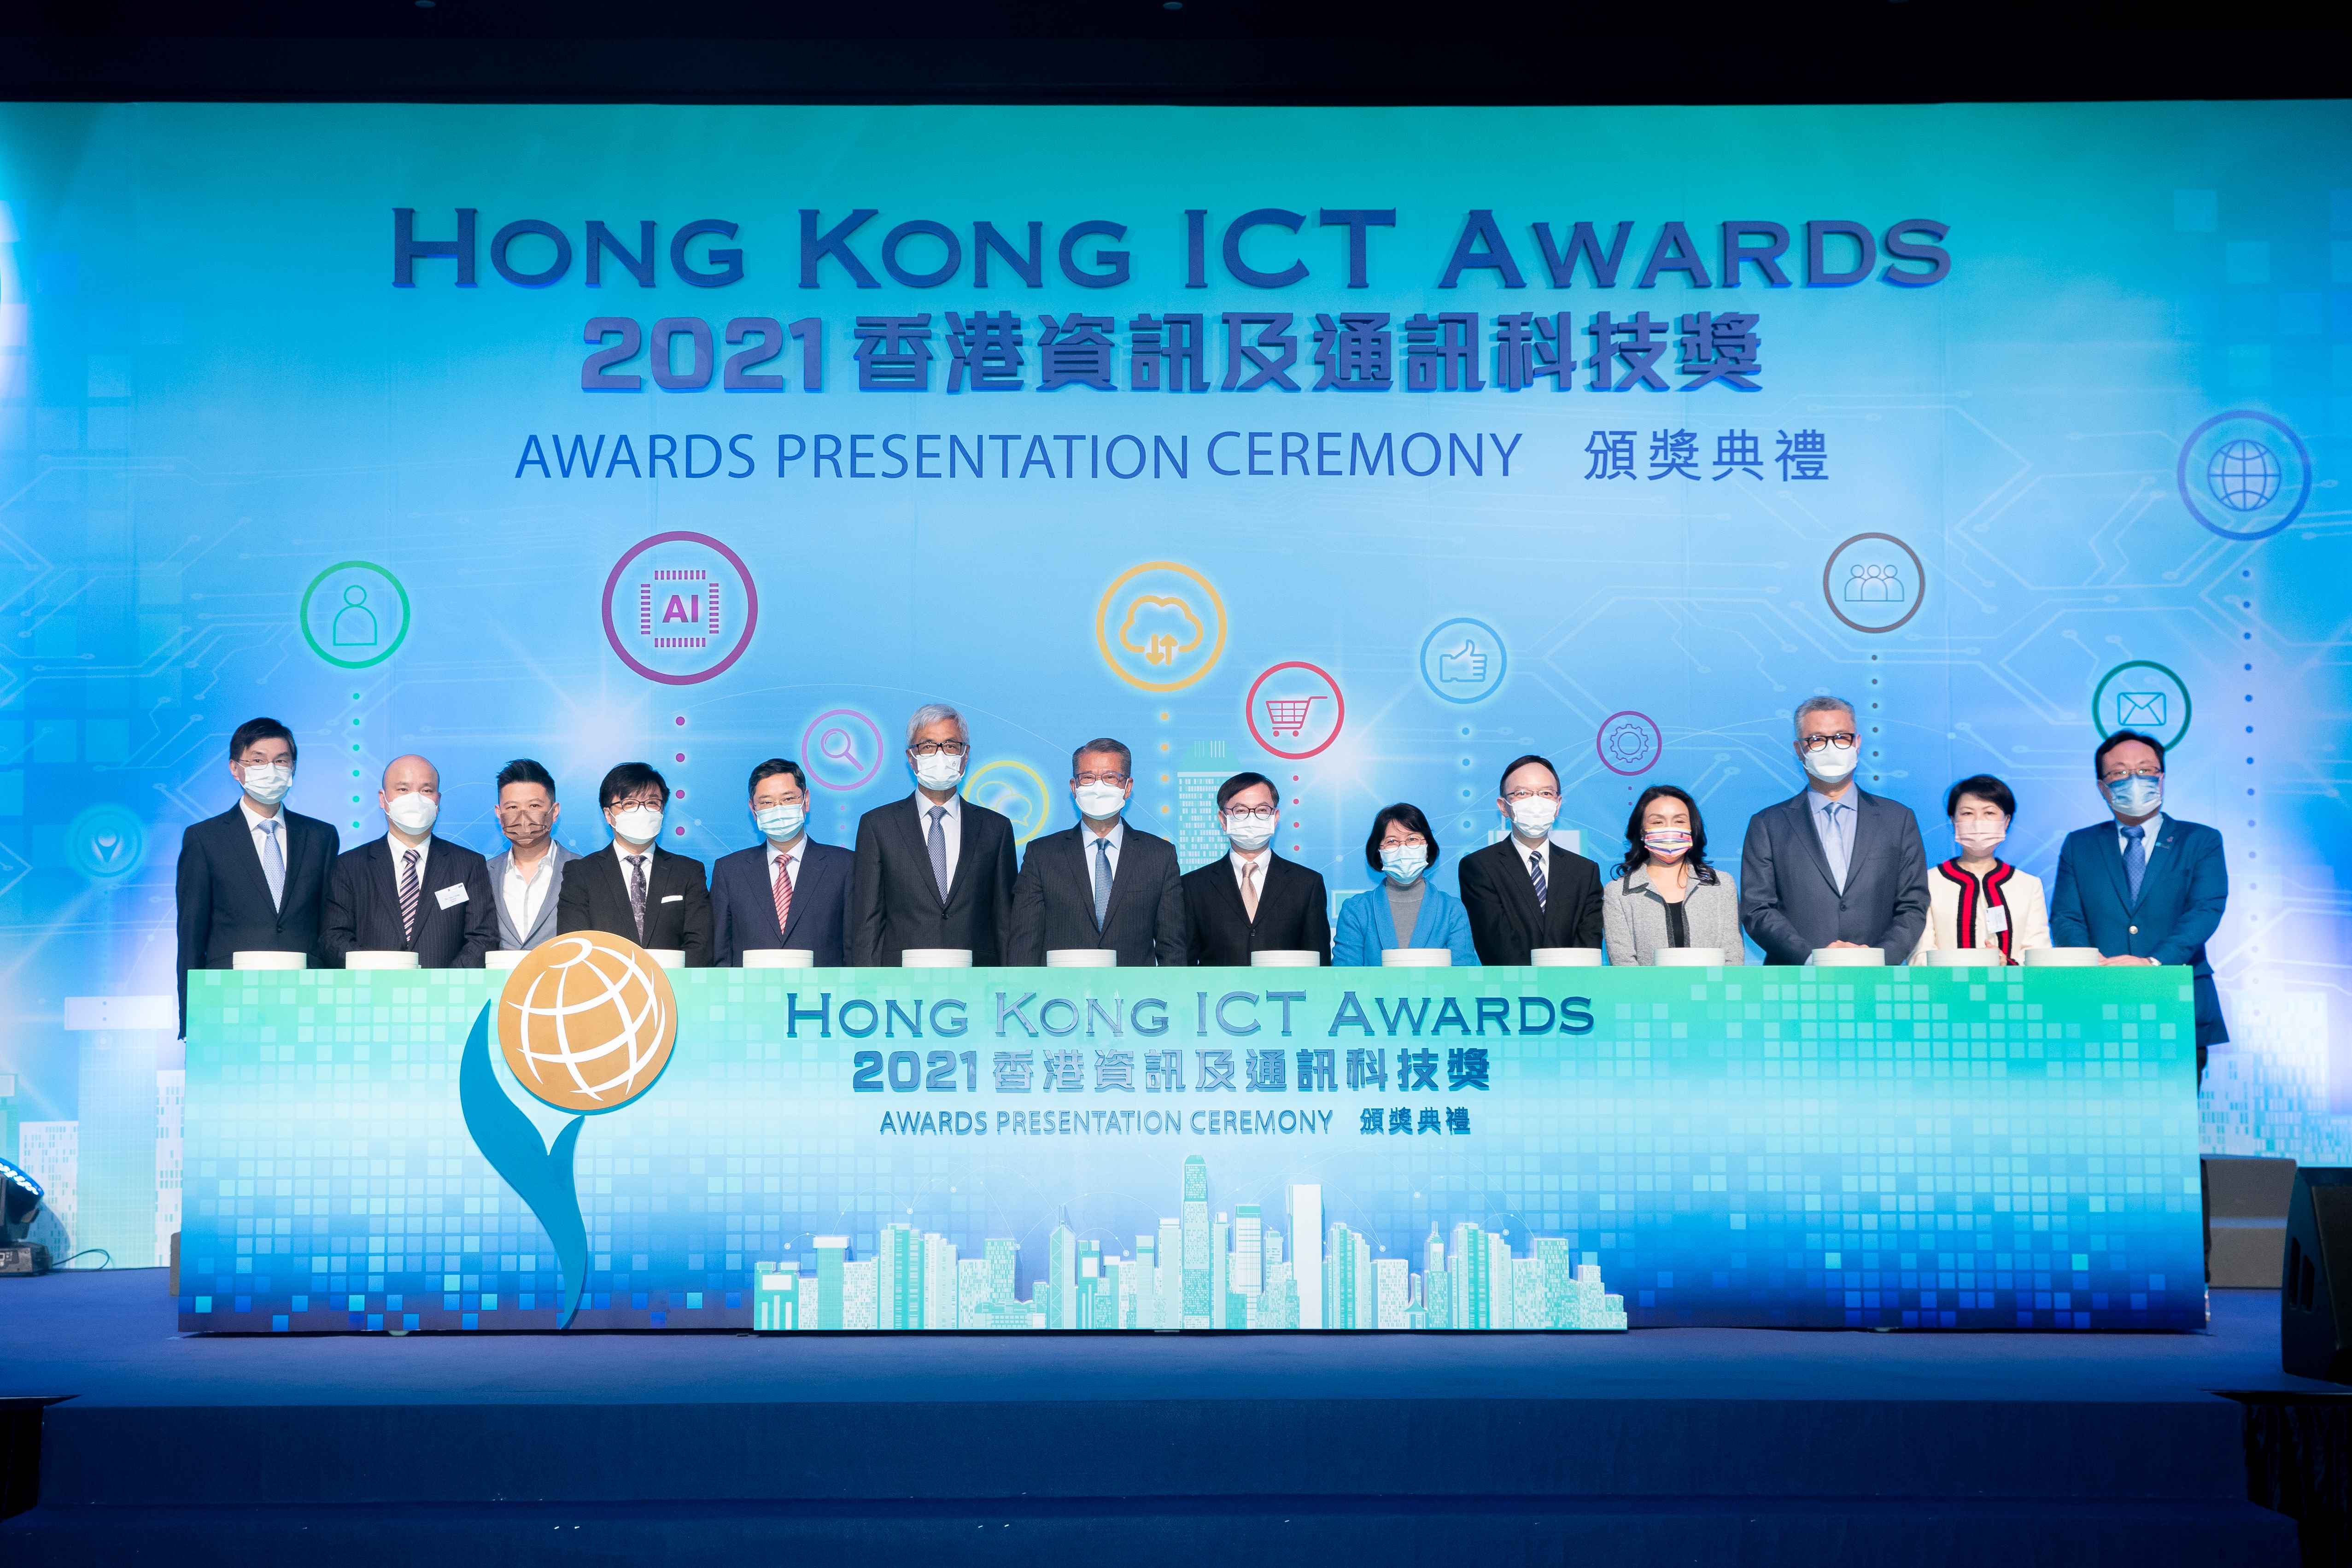 Hong Kong ICT Awards 2021 Awards Presentation Ceremony Kick-off Ceremony (before)